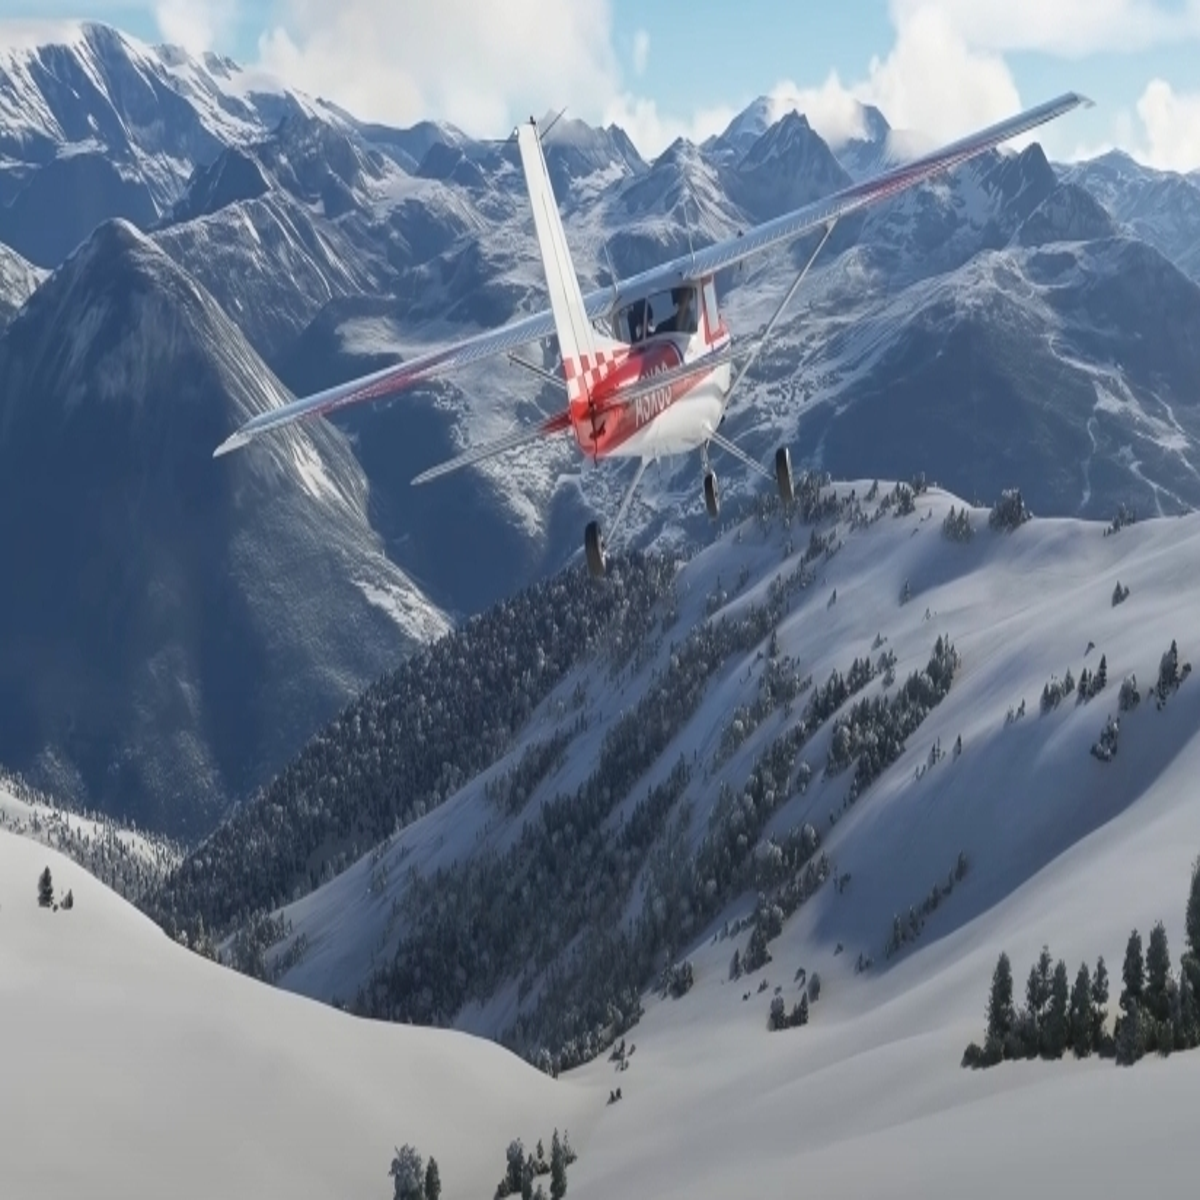 Microsoft Flight Simulator Adds New Plane To Local Legend Series - Xbox Wire